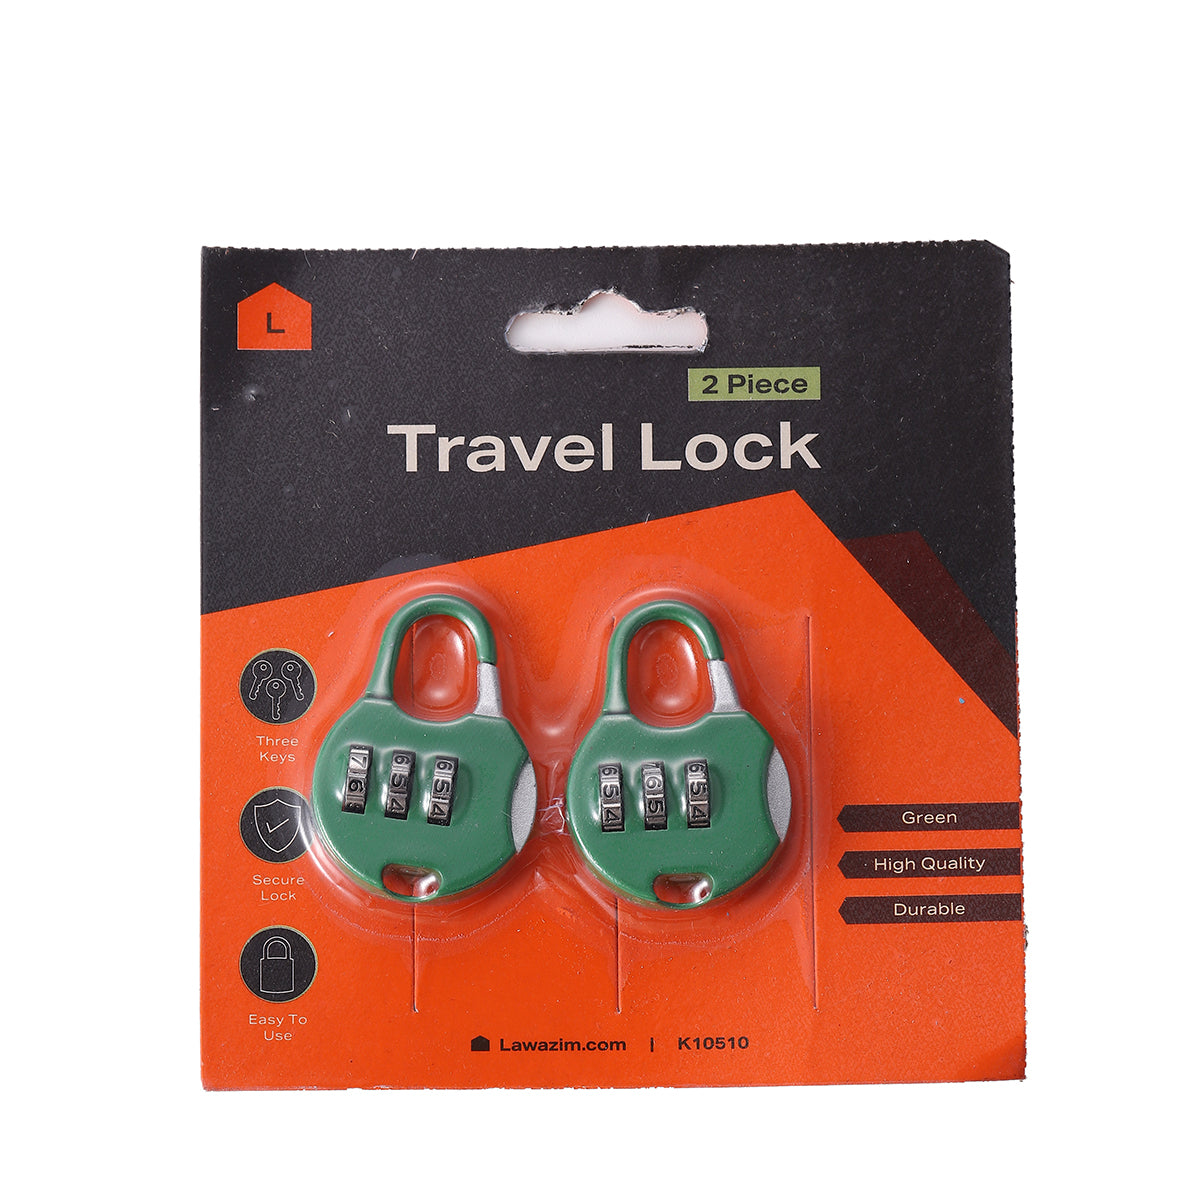 2-Piece Travel Lock - Green